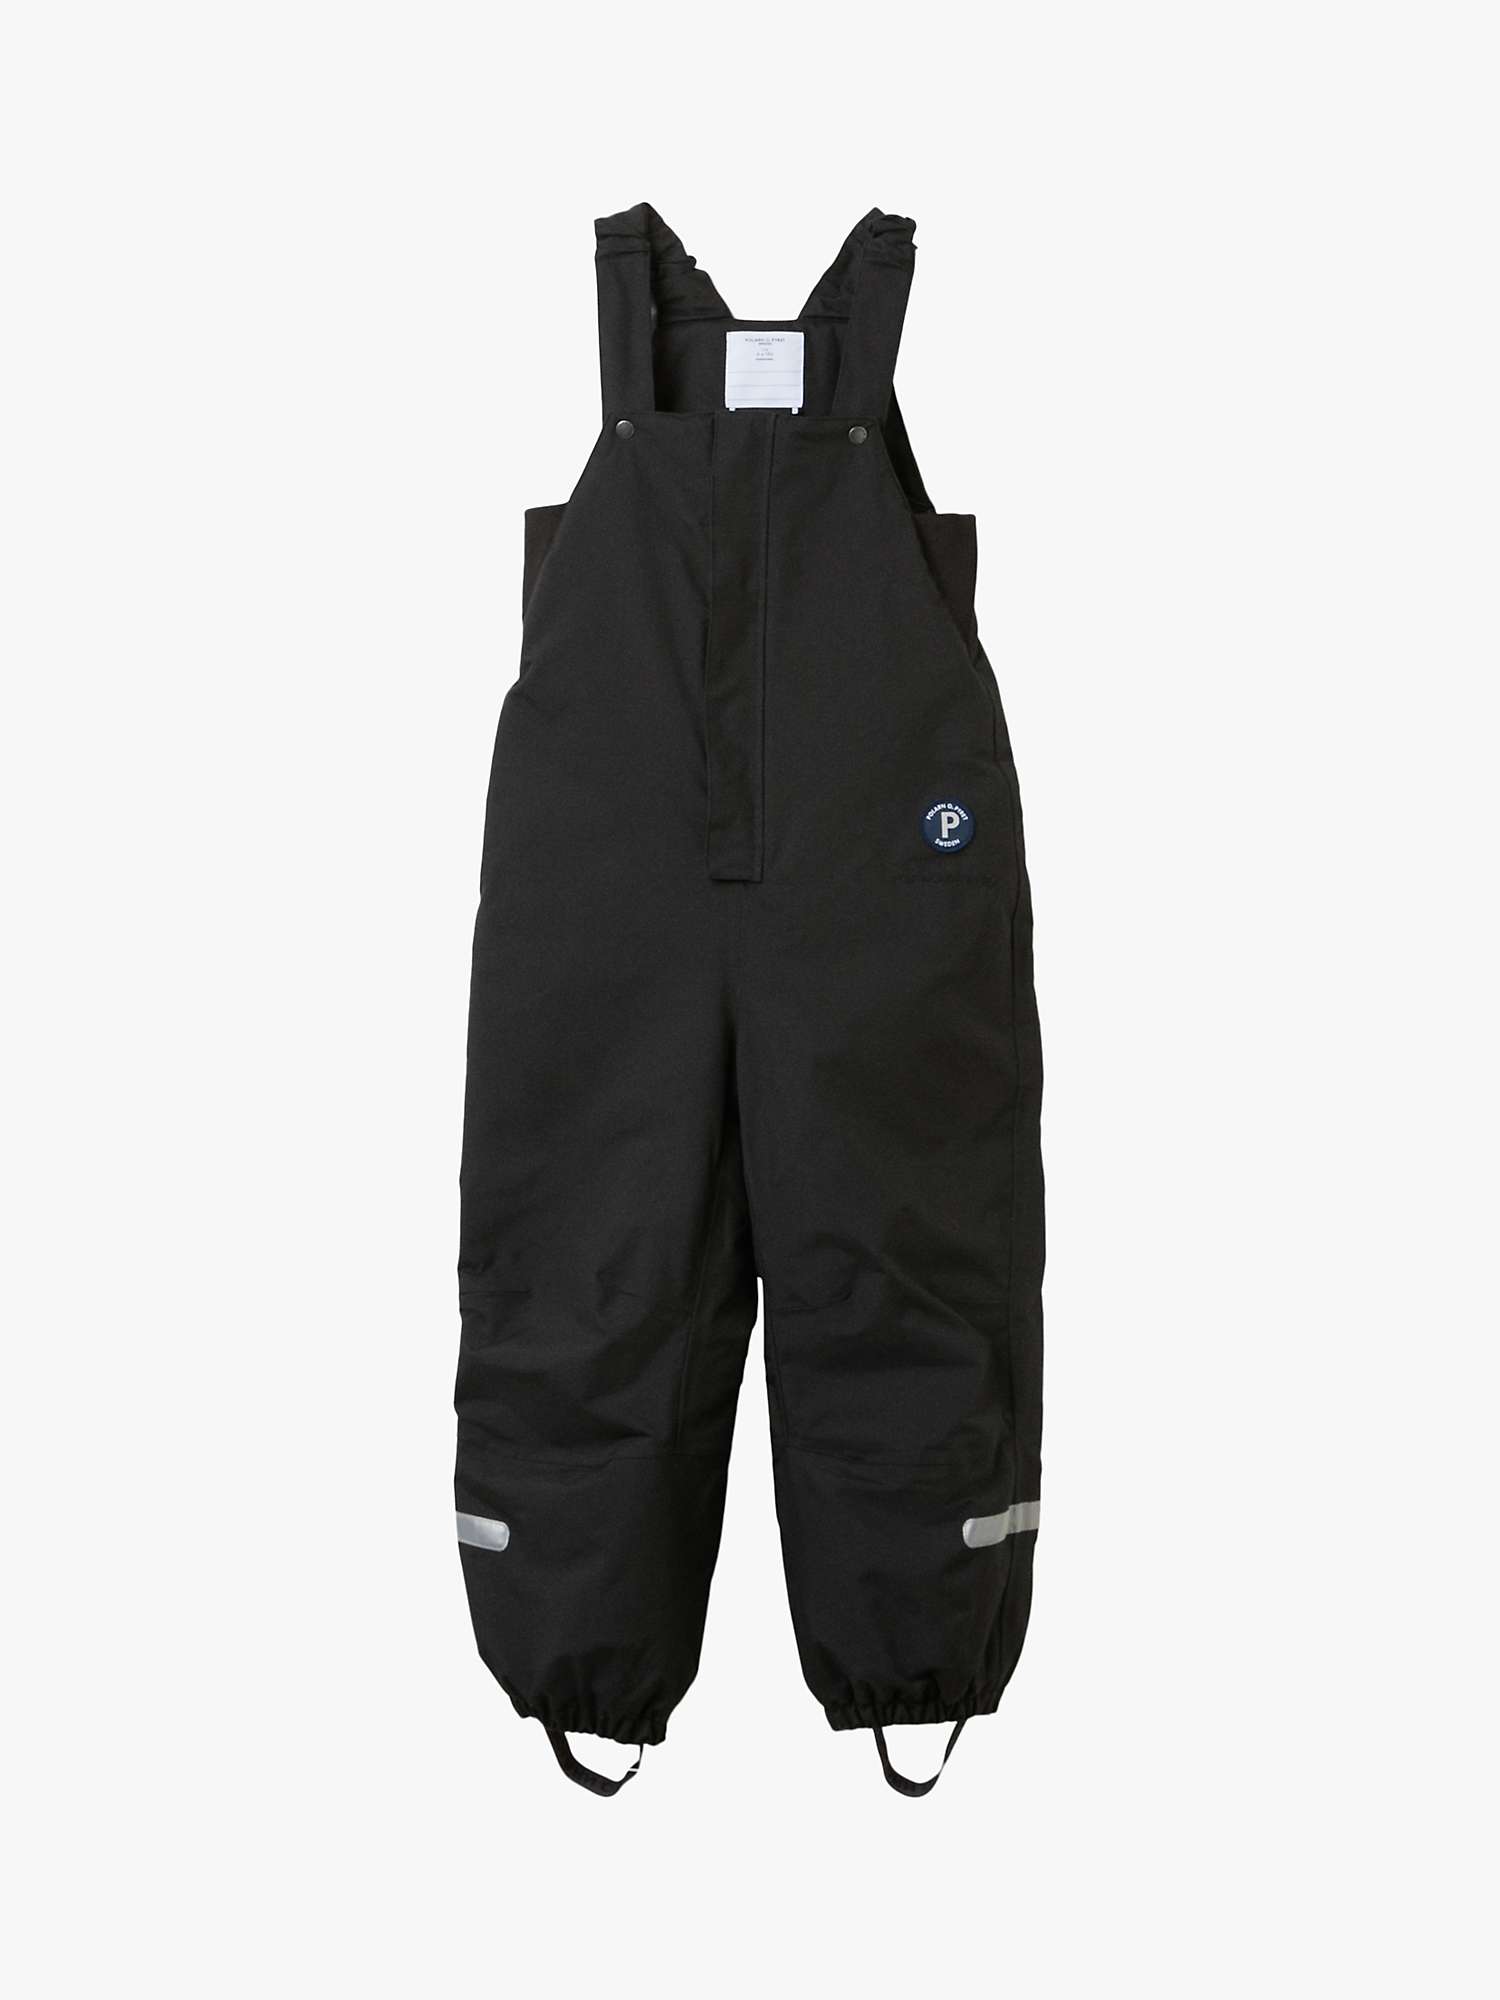 Buy Polarn O. Pyret Kids' Padded Waterproof Winter Trousers, Black Online at johnlewis.com